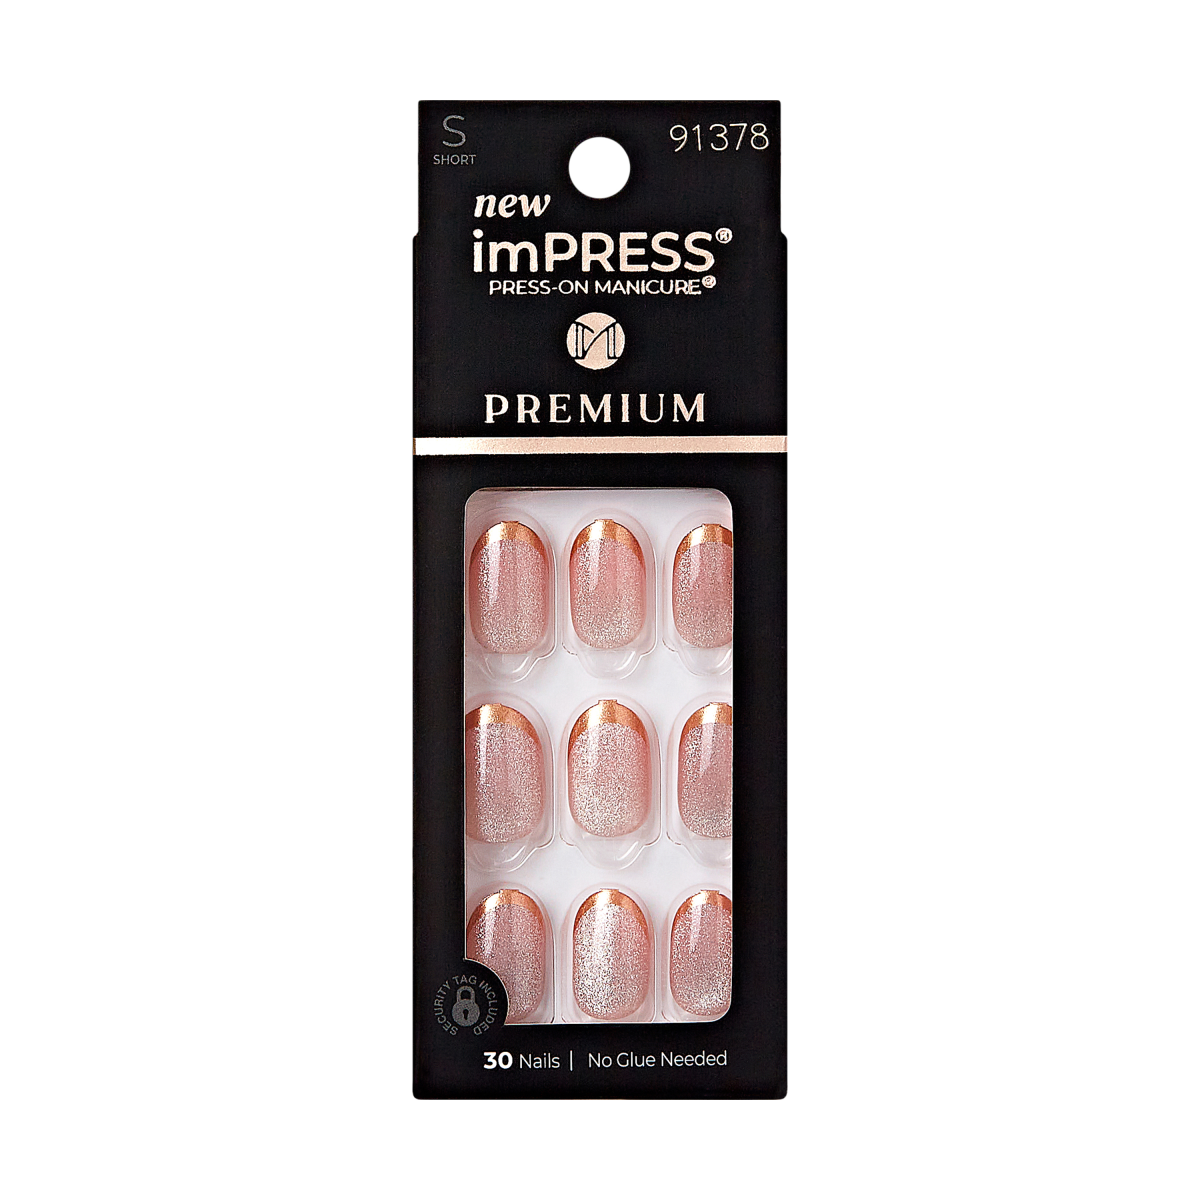 imPRESS Premium Press-On Manicure - Hideaway